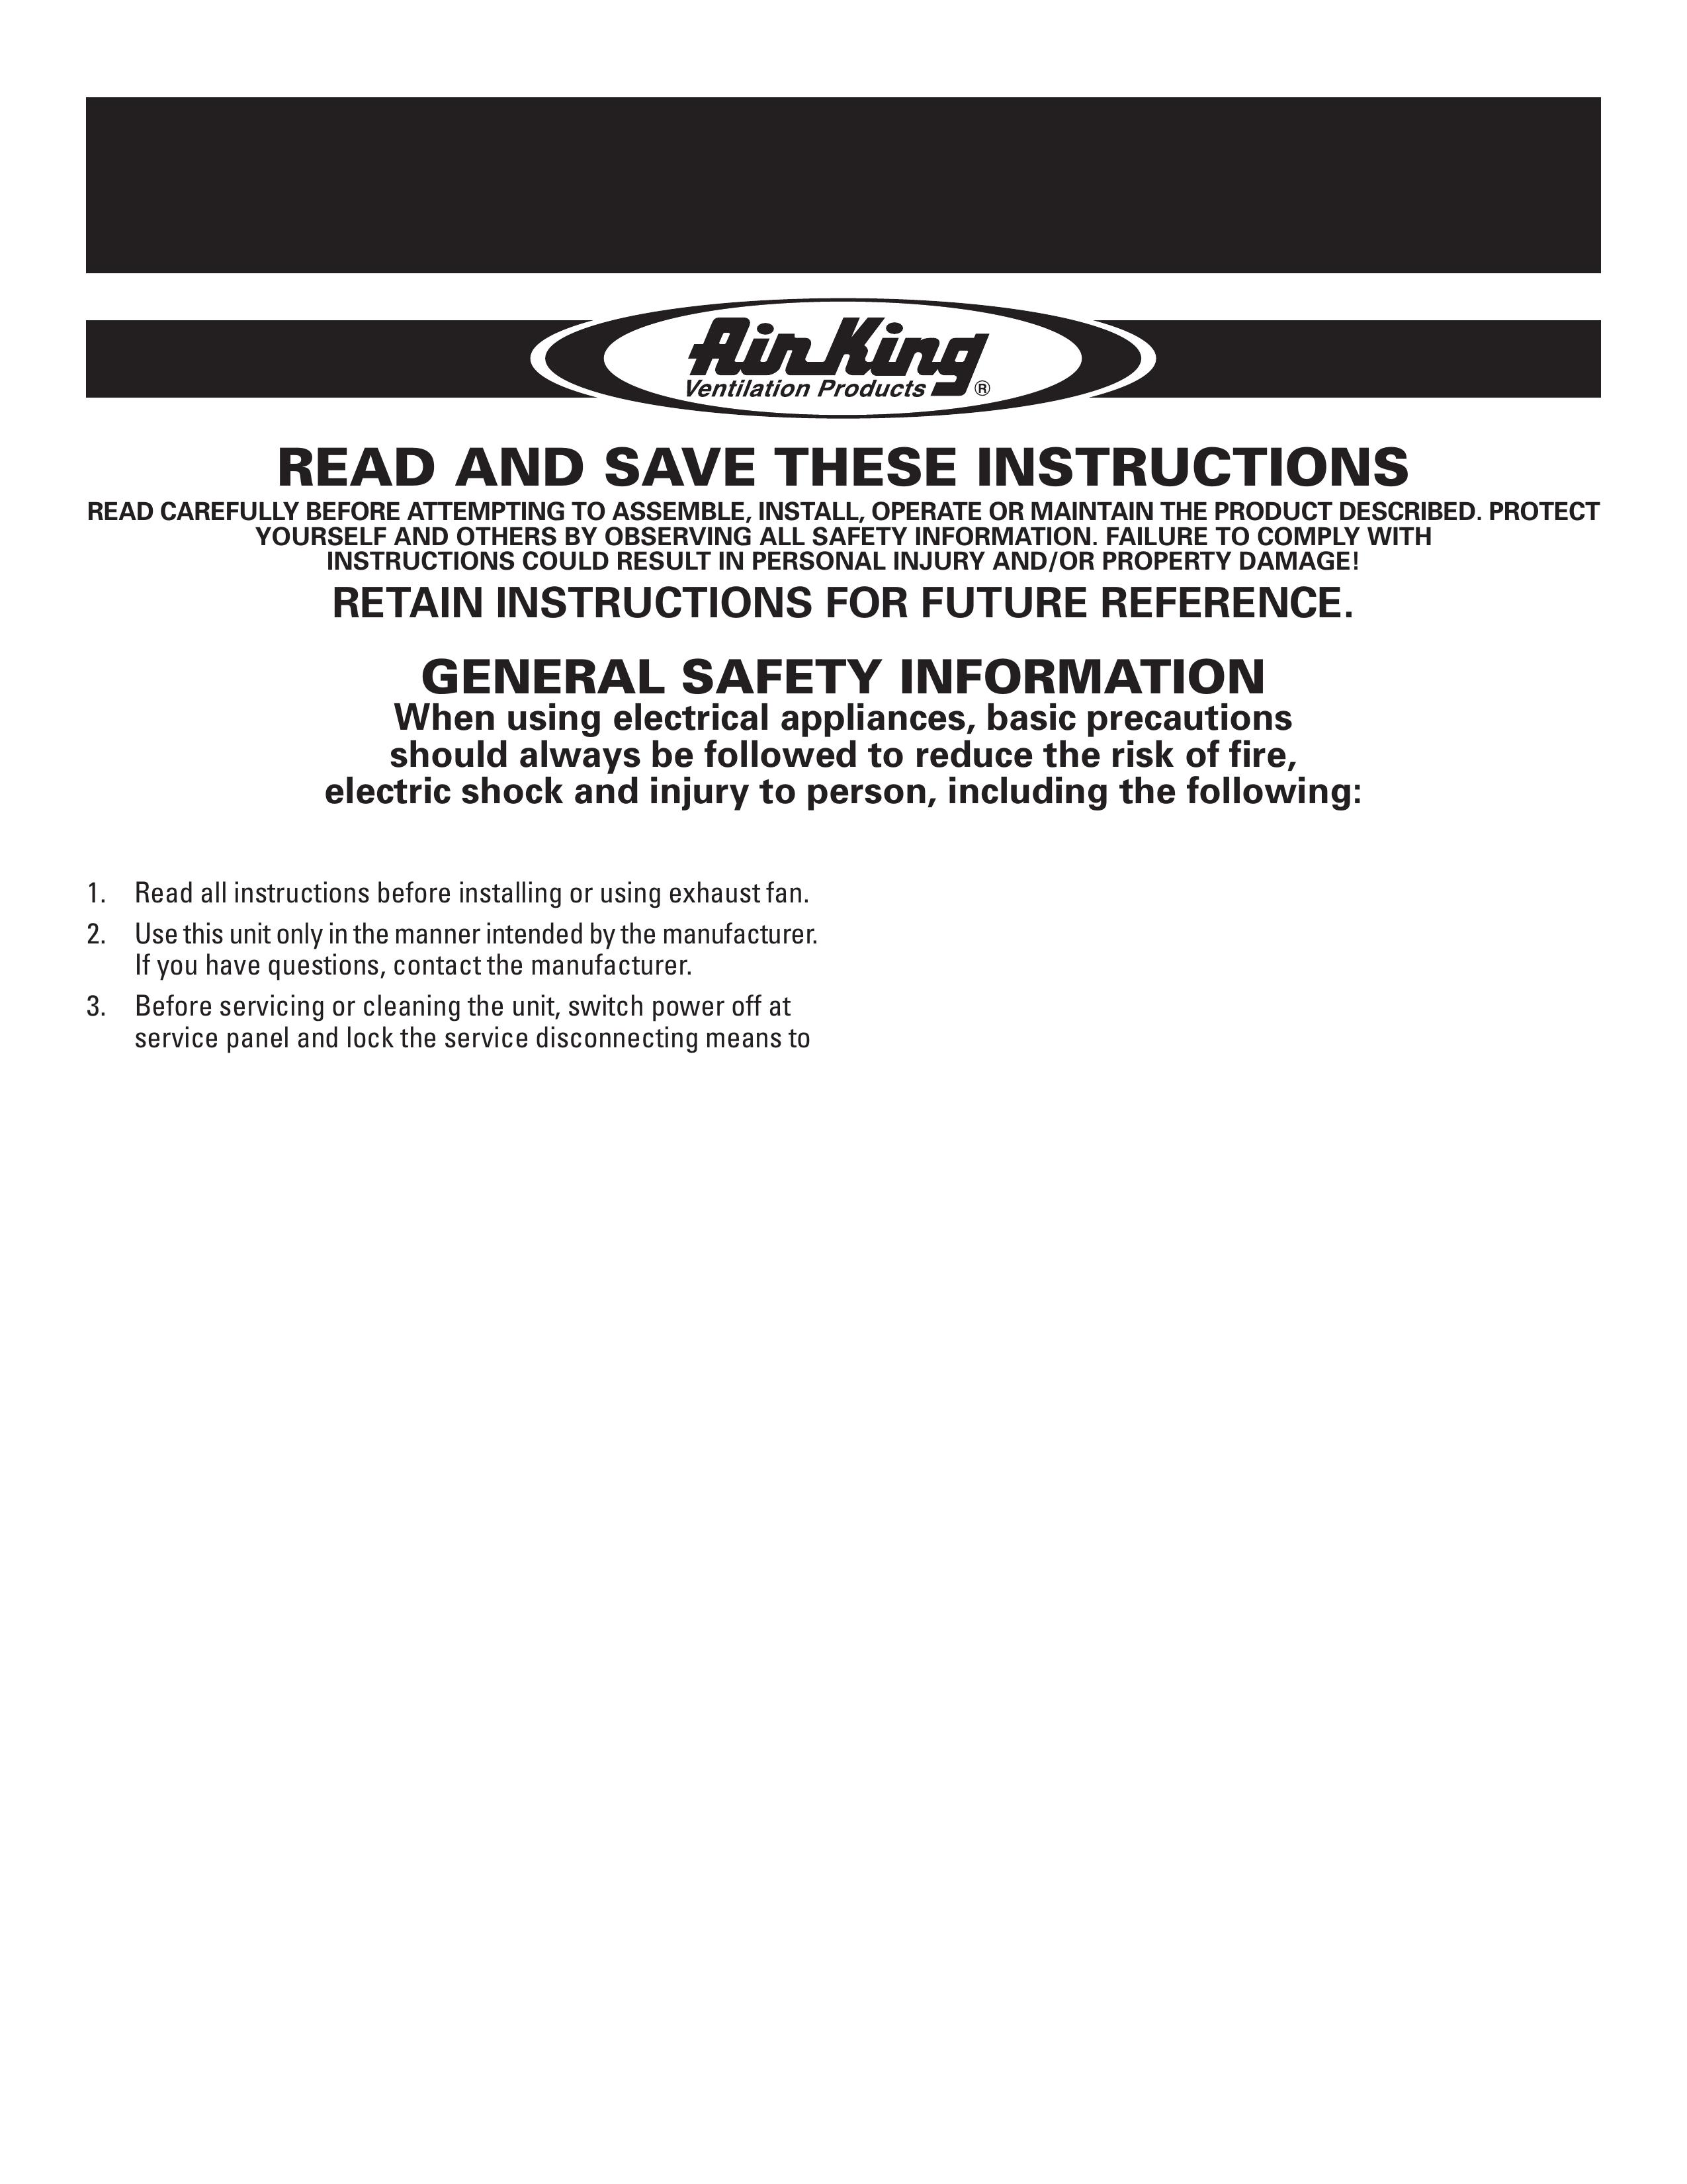 Air King AK110 Blower User Manual